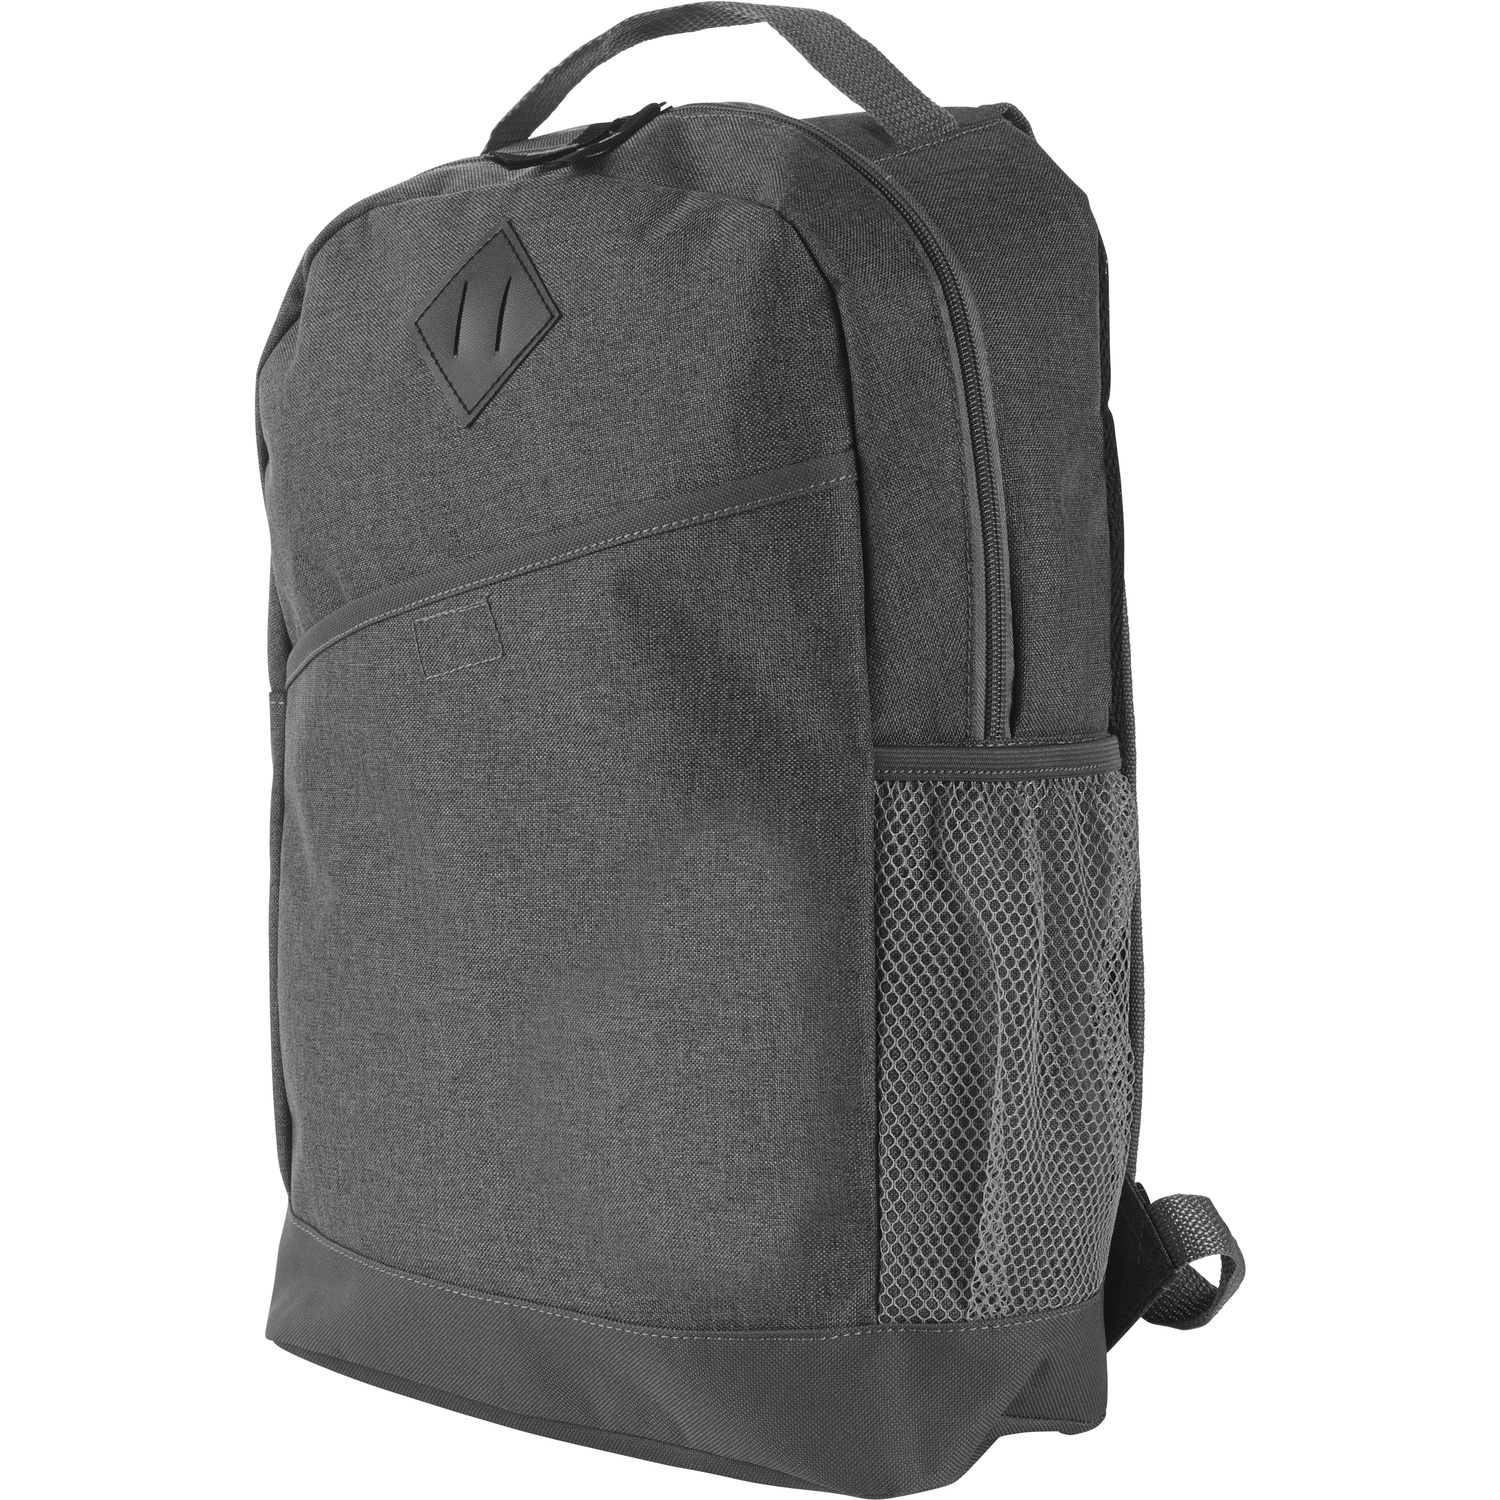 000946 003999999 3d090 rgt pro01 fal - Polycanvas backpack